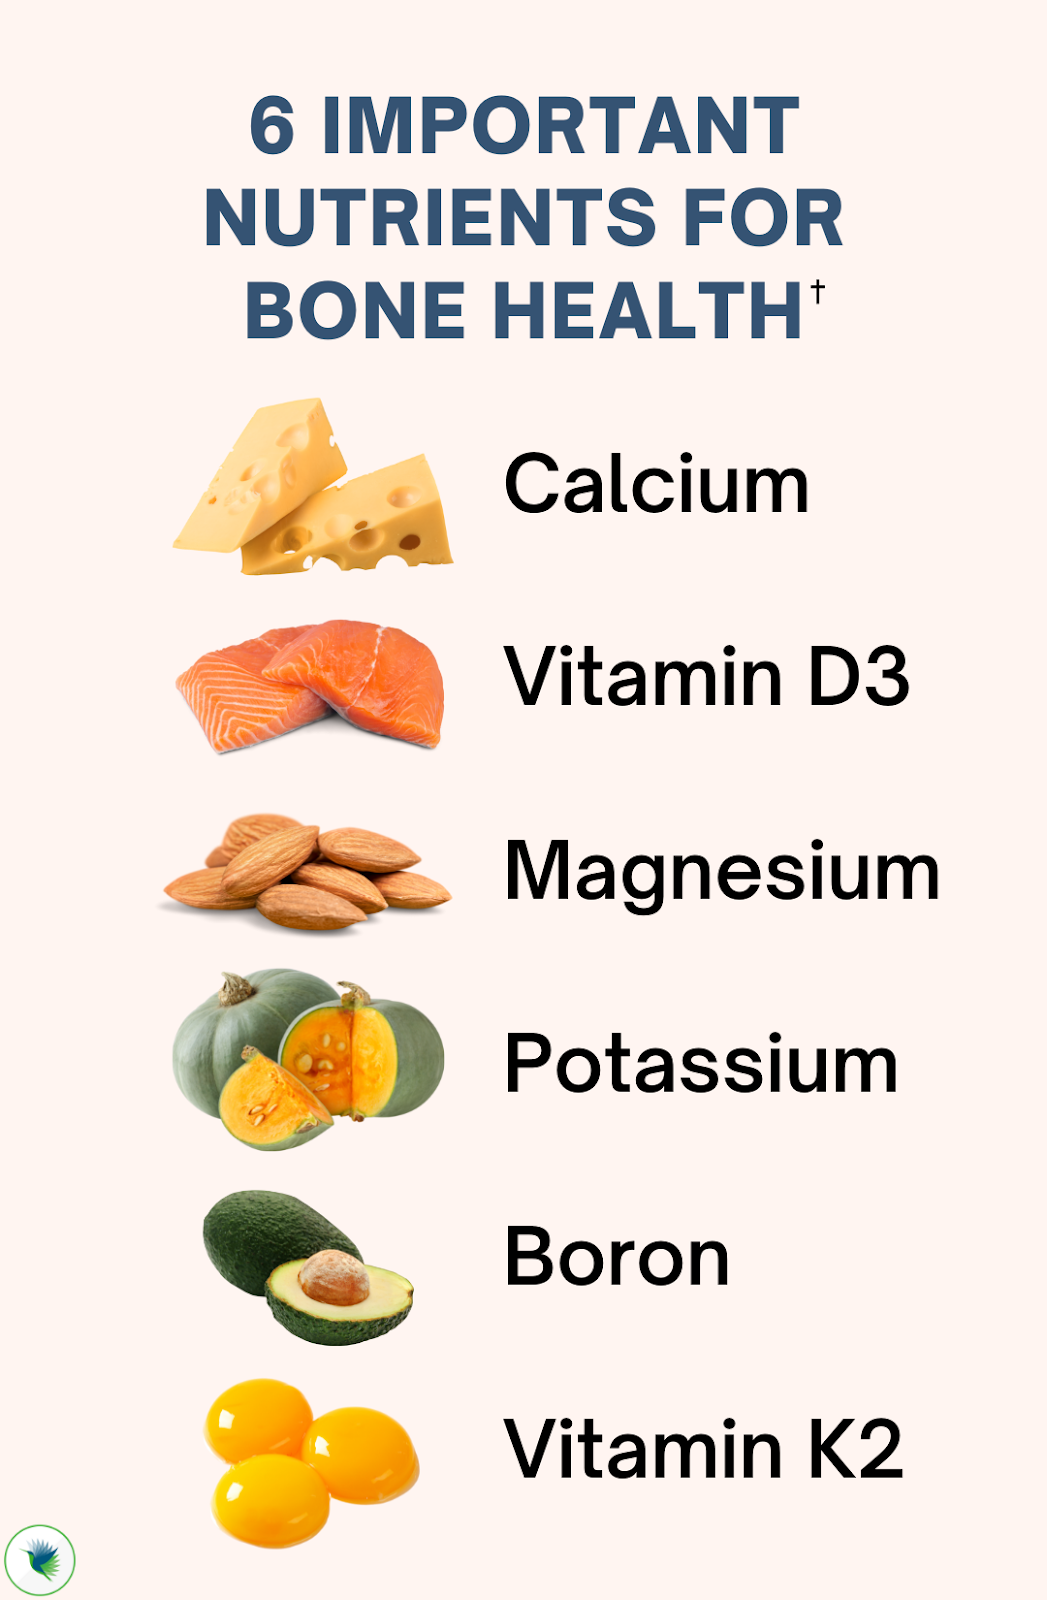 Bone health nutrition